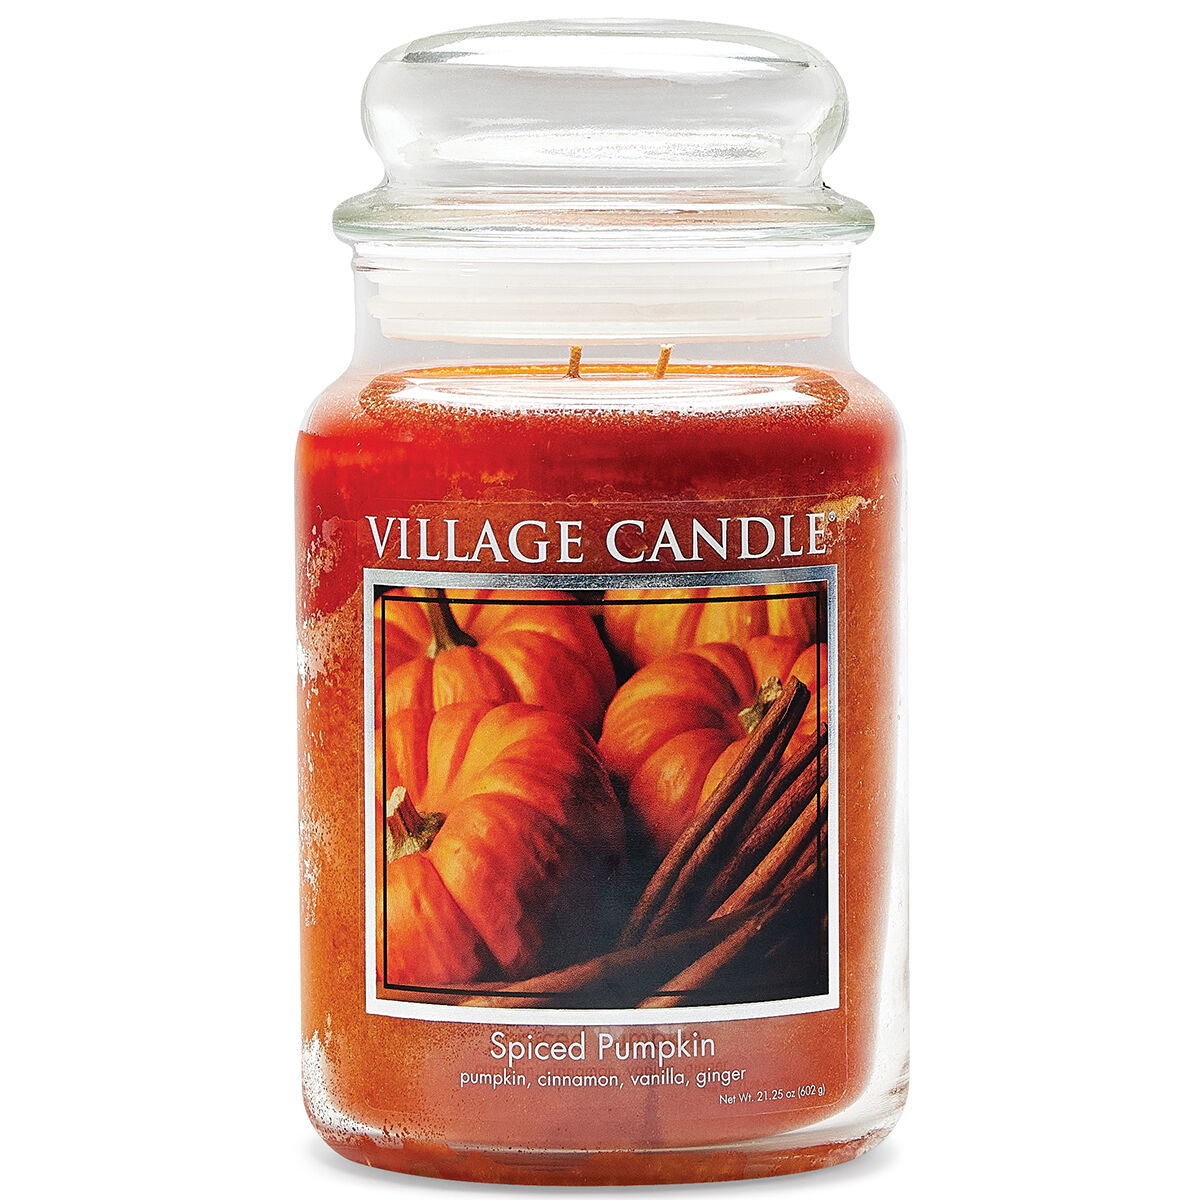 Pumpkin Spice Candle - 3 sizes - Village Candle - Stonewall Kitchen